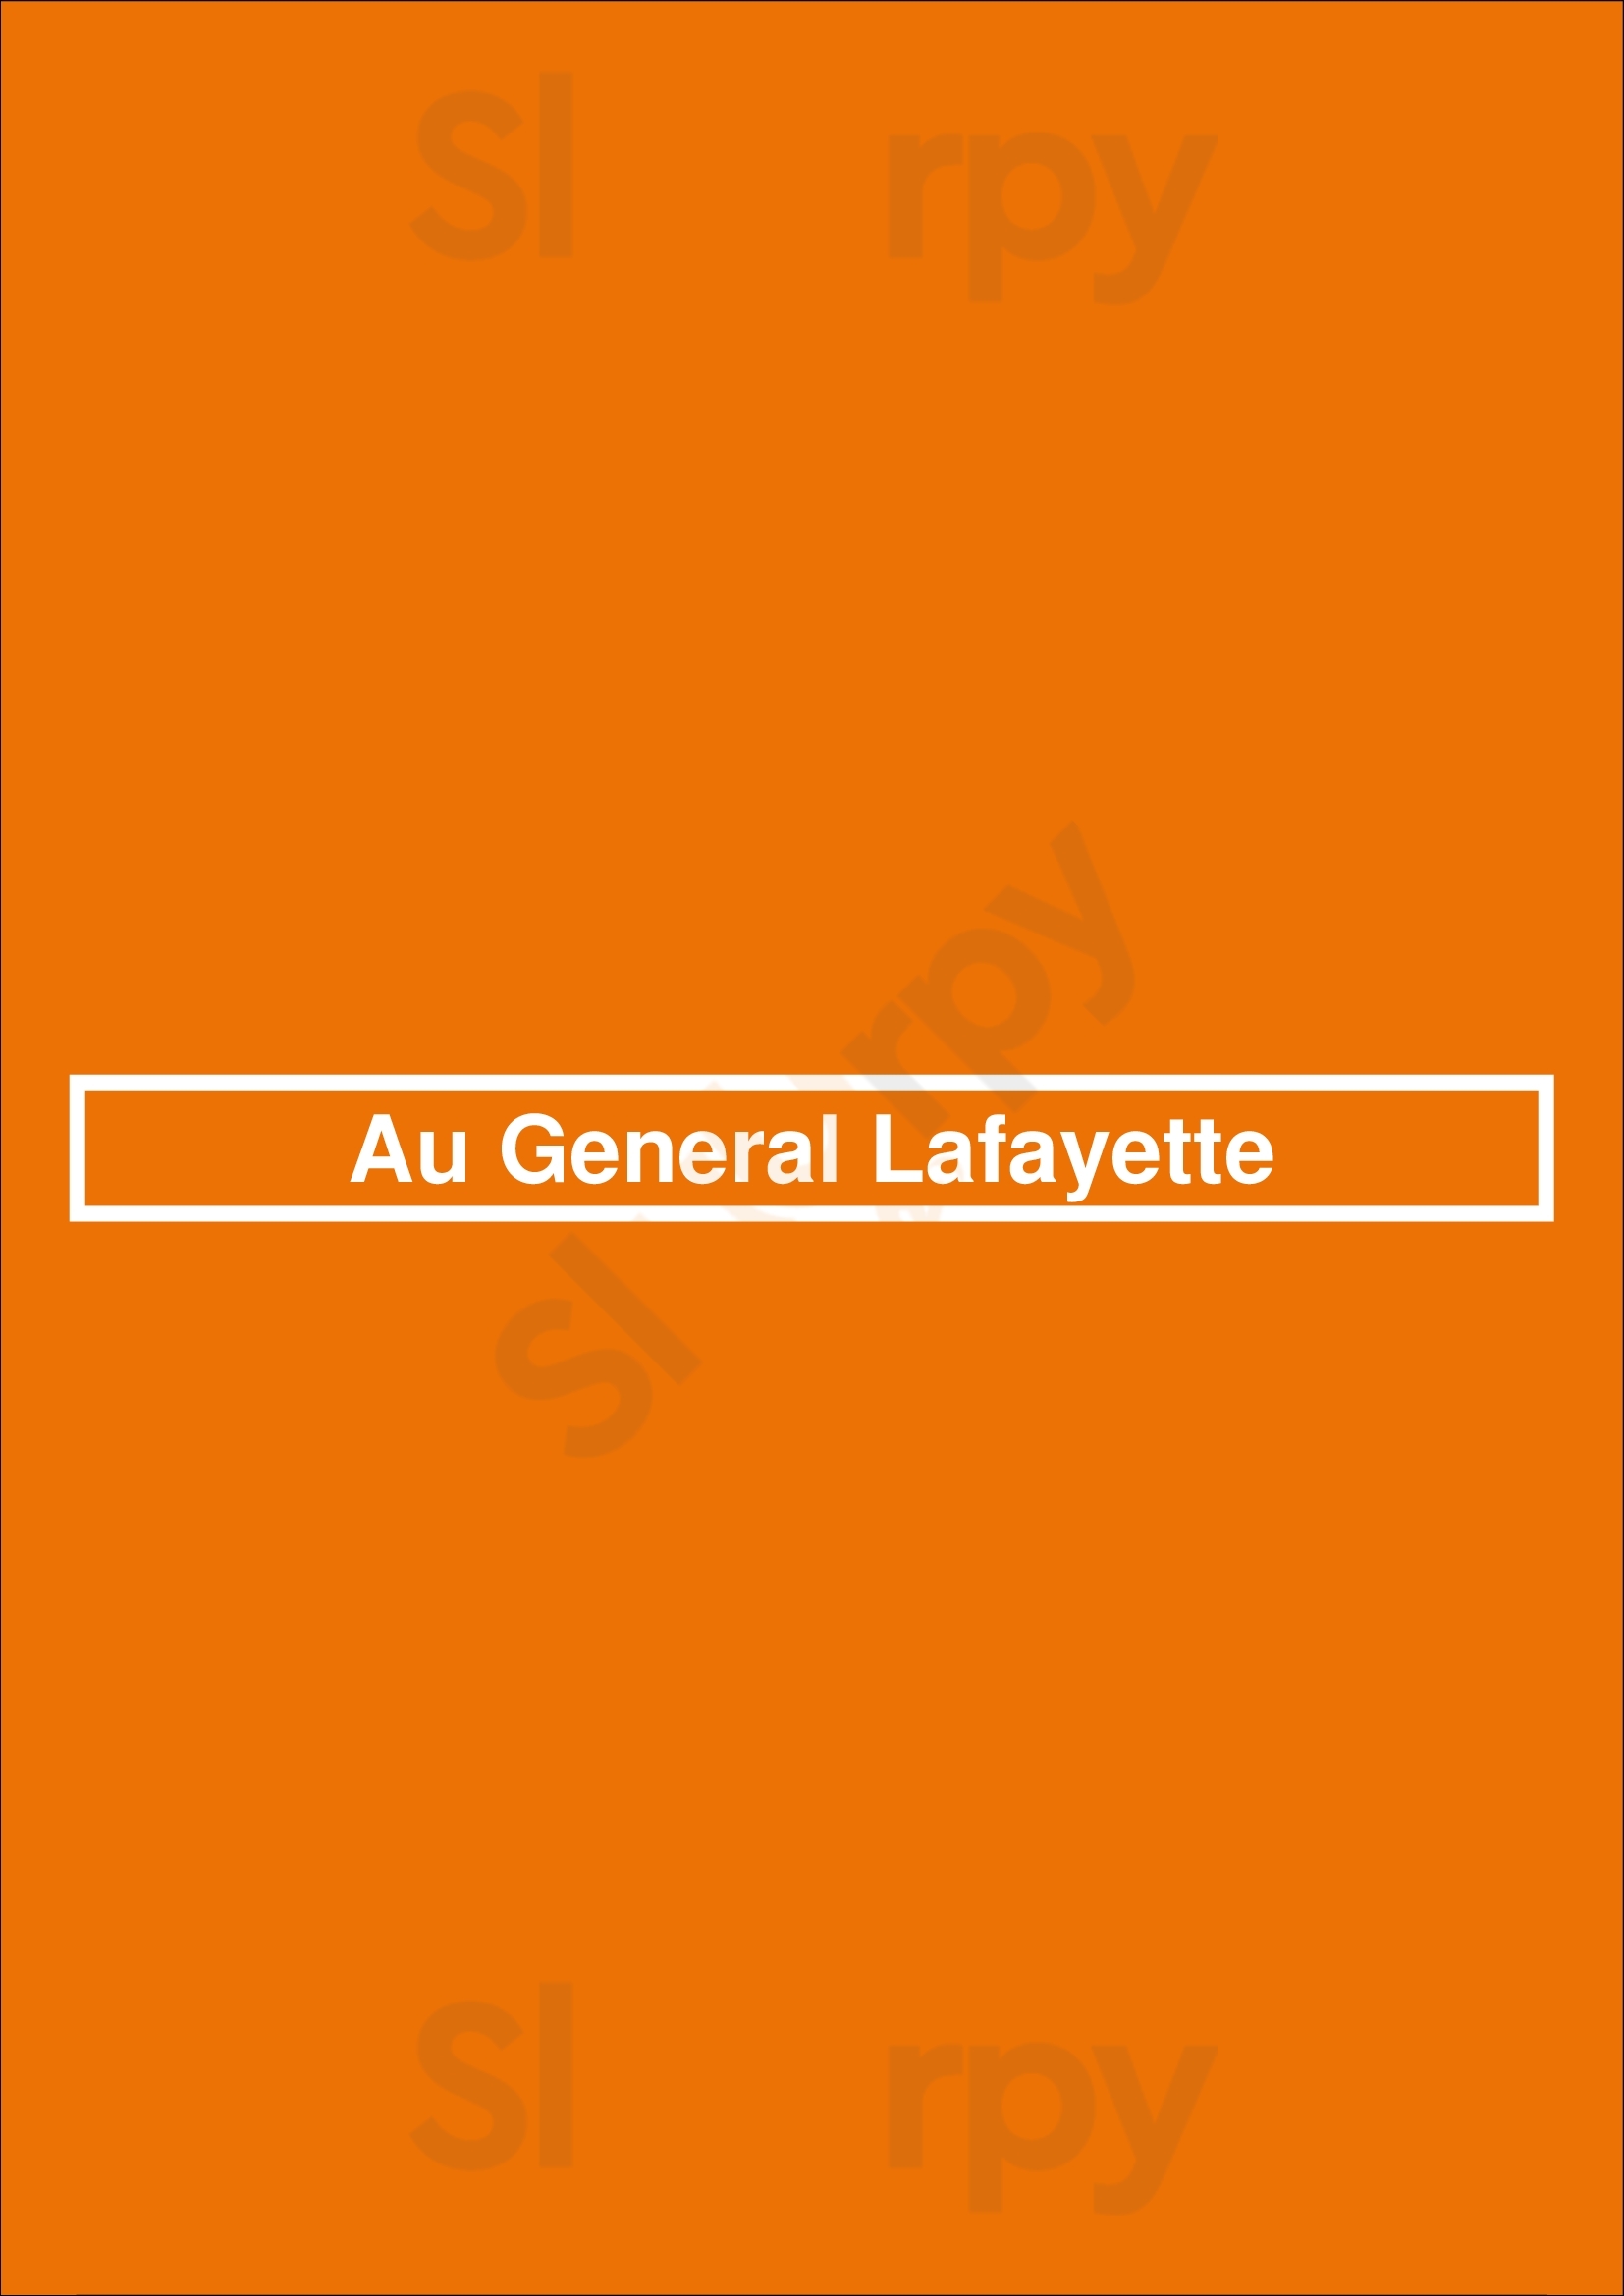 Au General Lafayette Paris Menu - 1